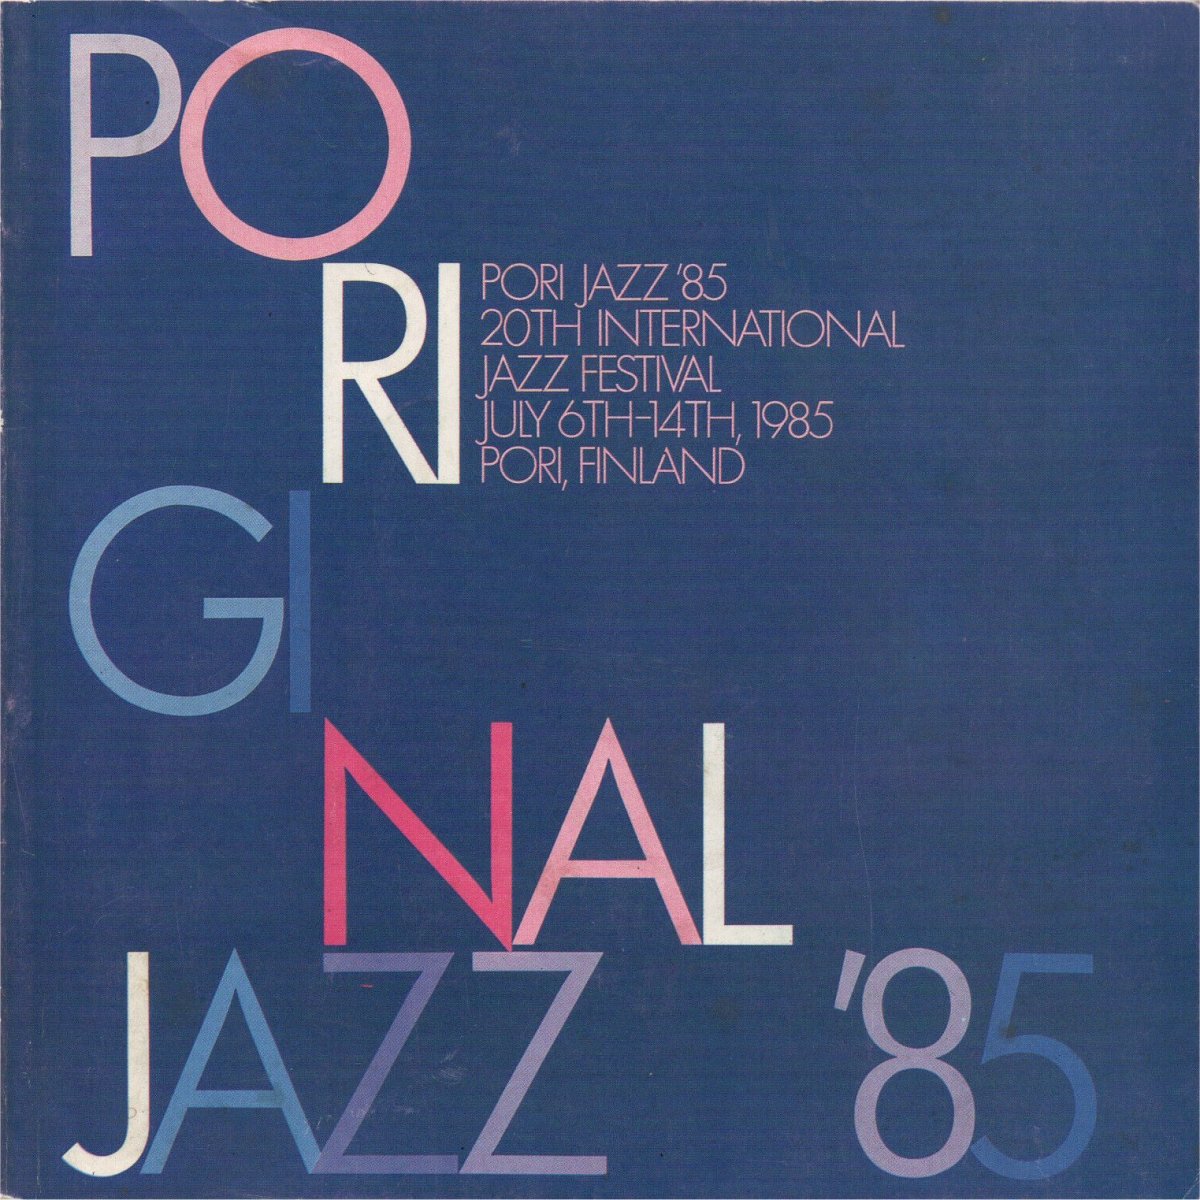 Stevie Ray Vaughan Pori Jazz Festival 1985 Programme